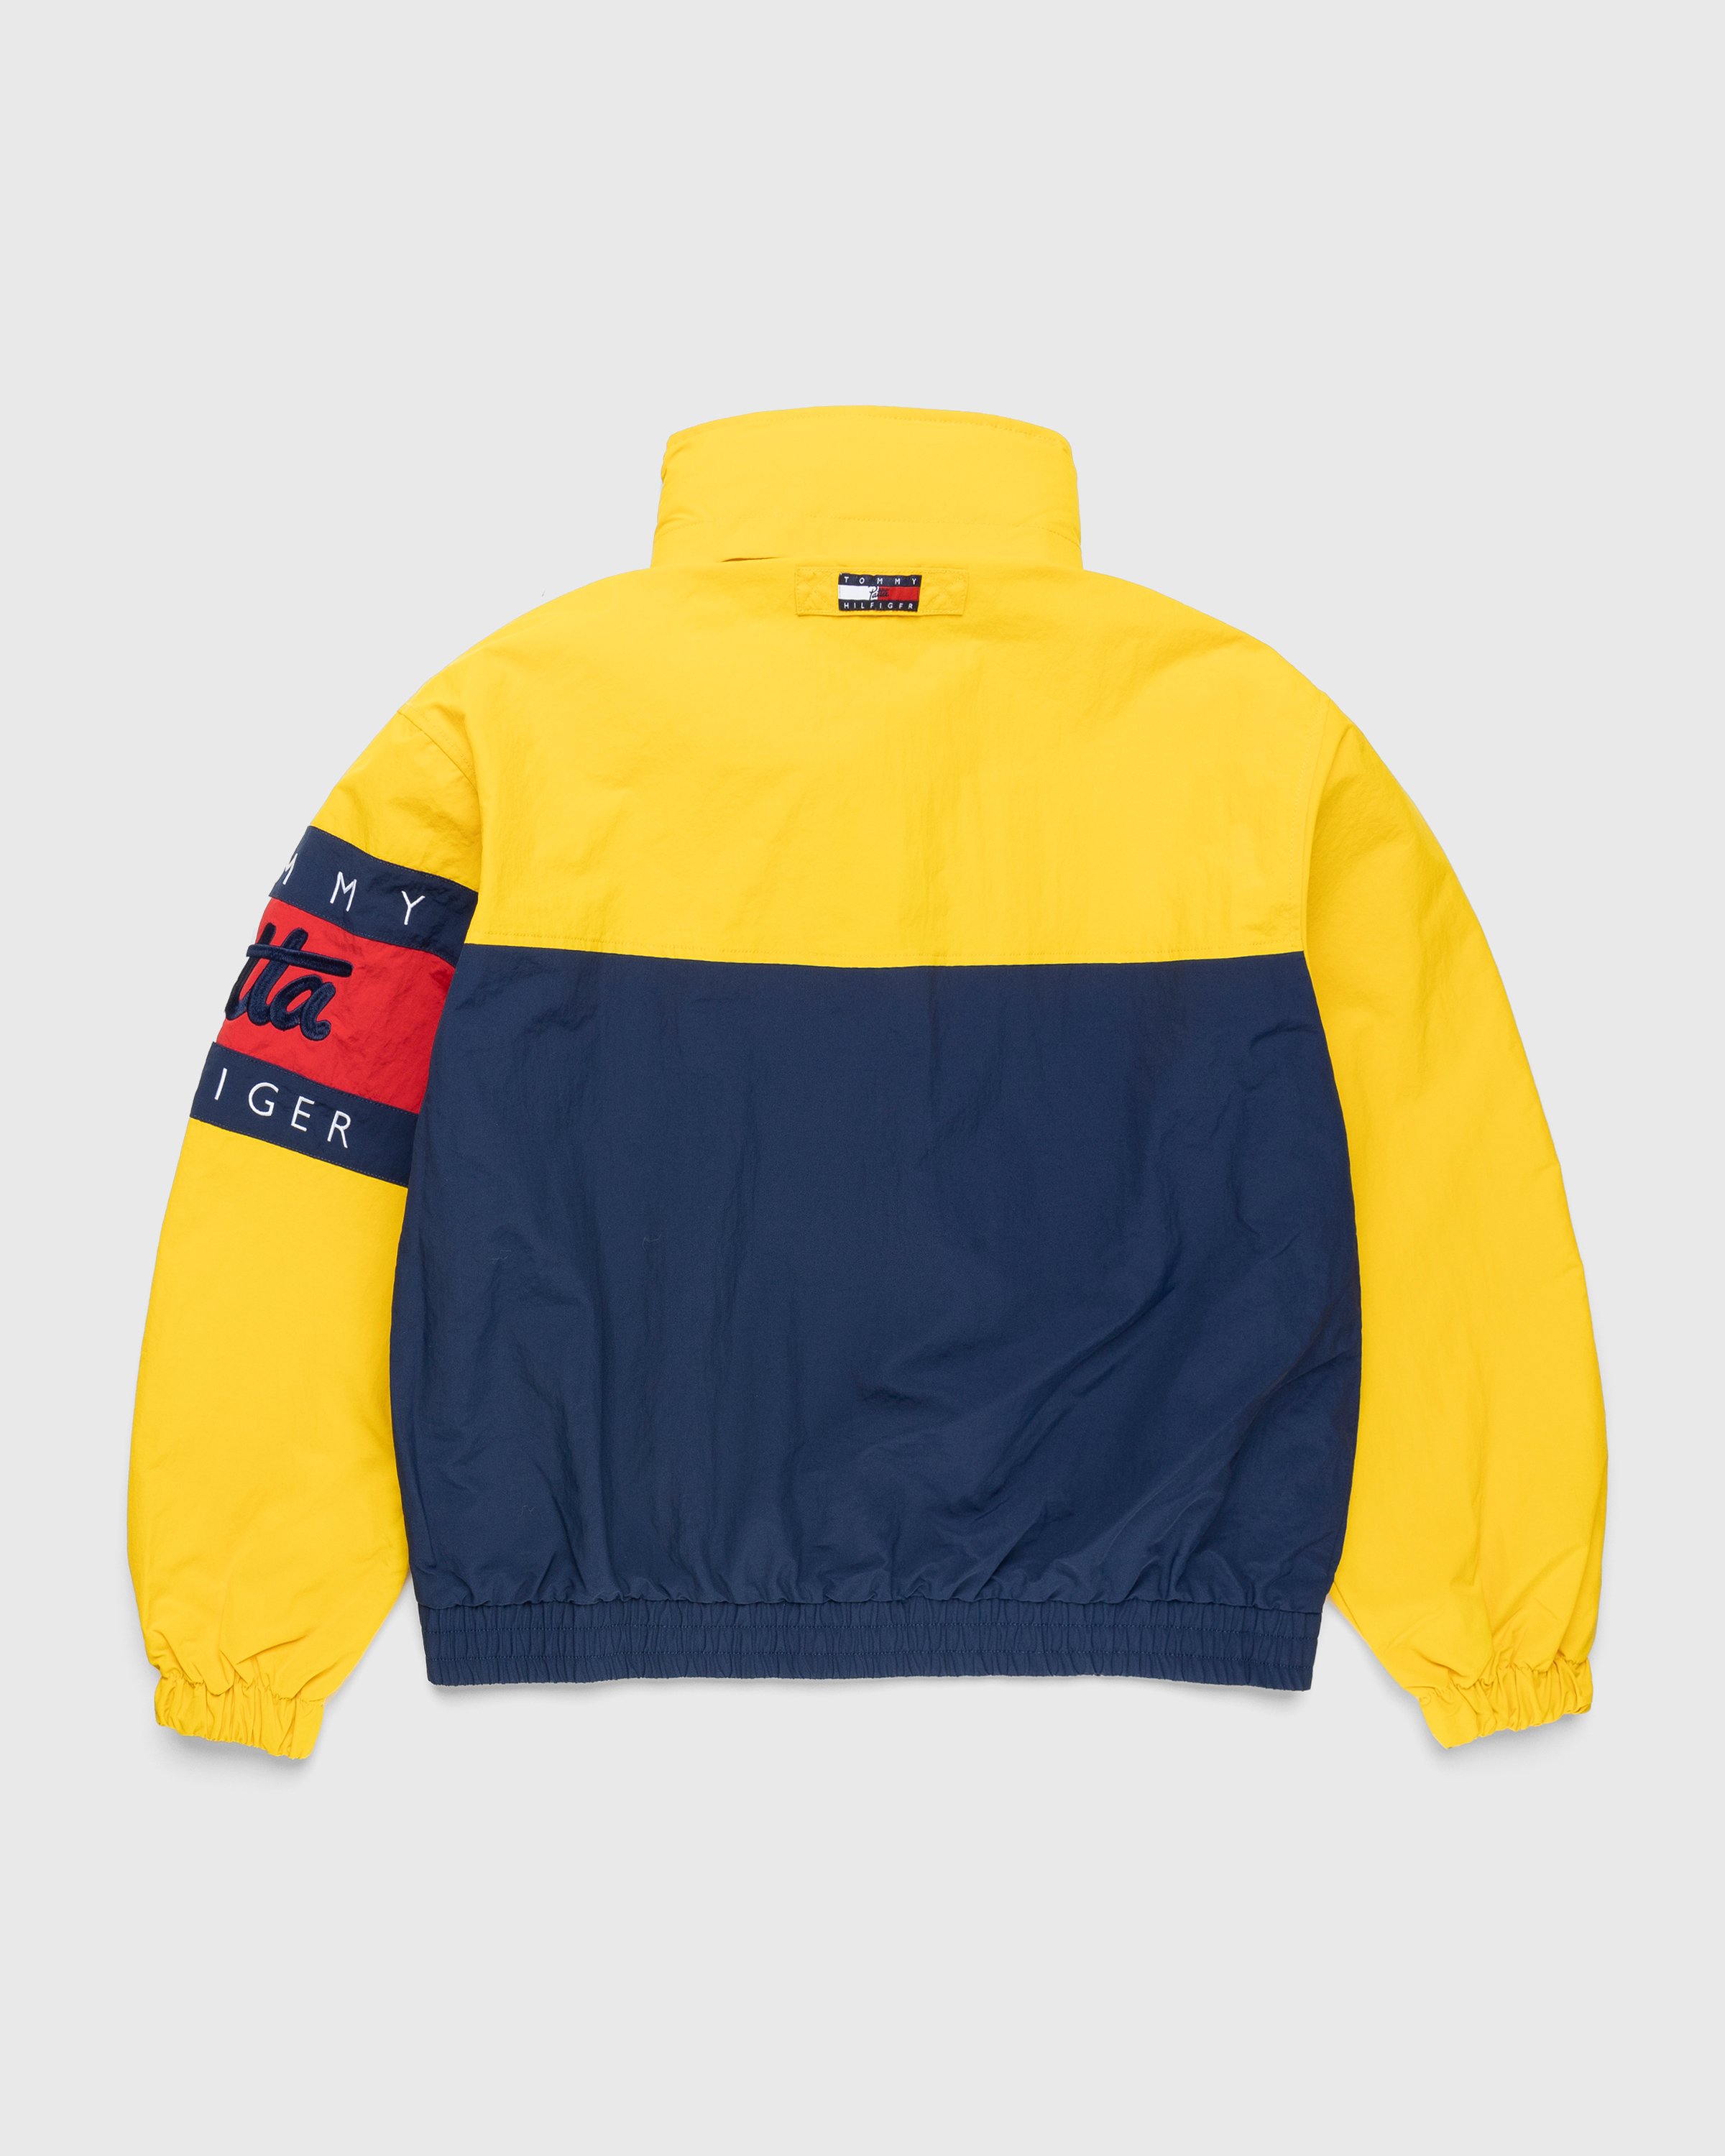 Patta x Tommy Hilfiger - Regatta Jacket Pollen - Clothing - Yellow - Image 2